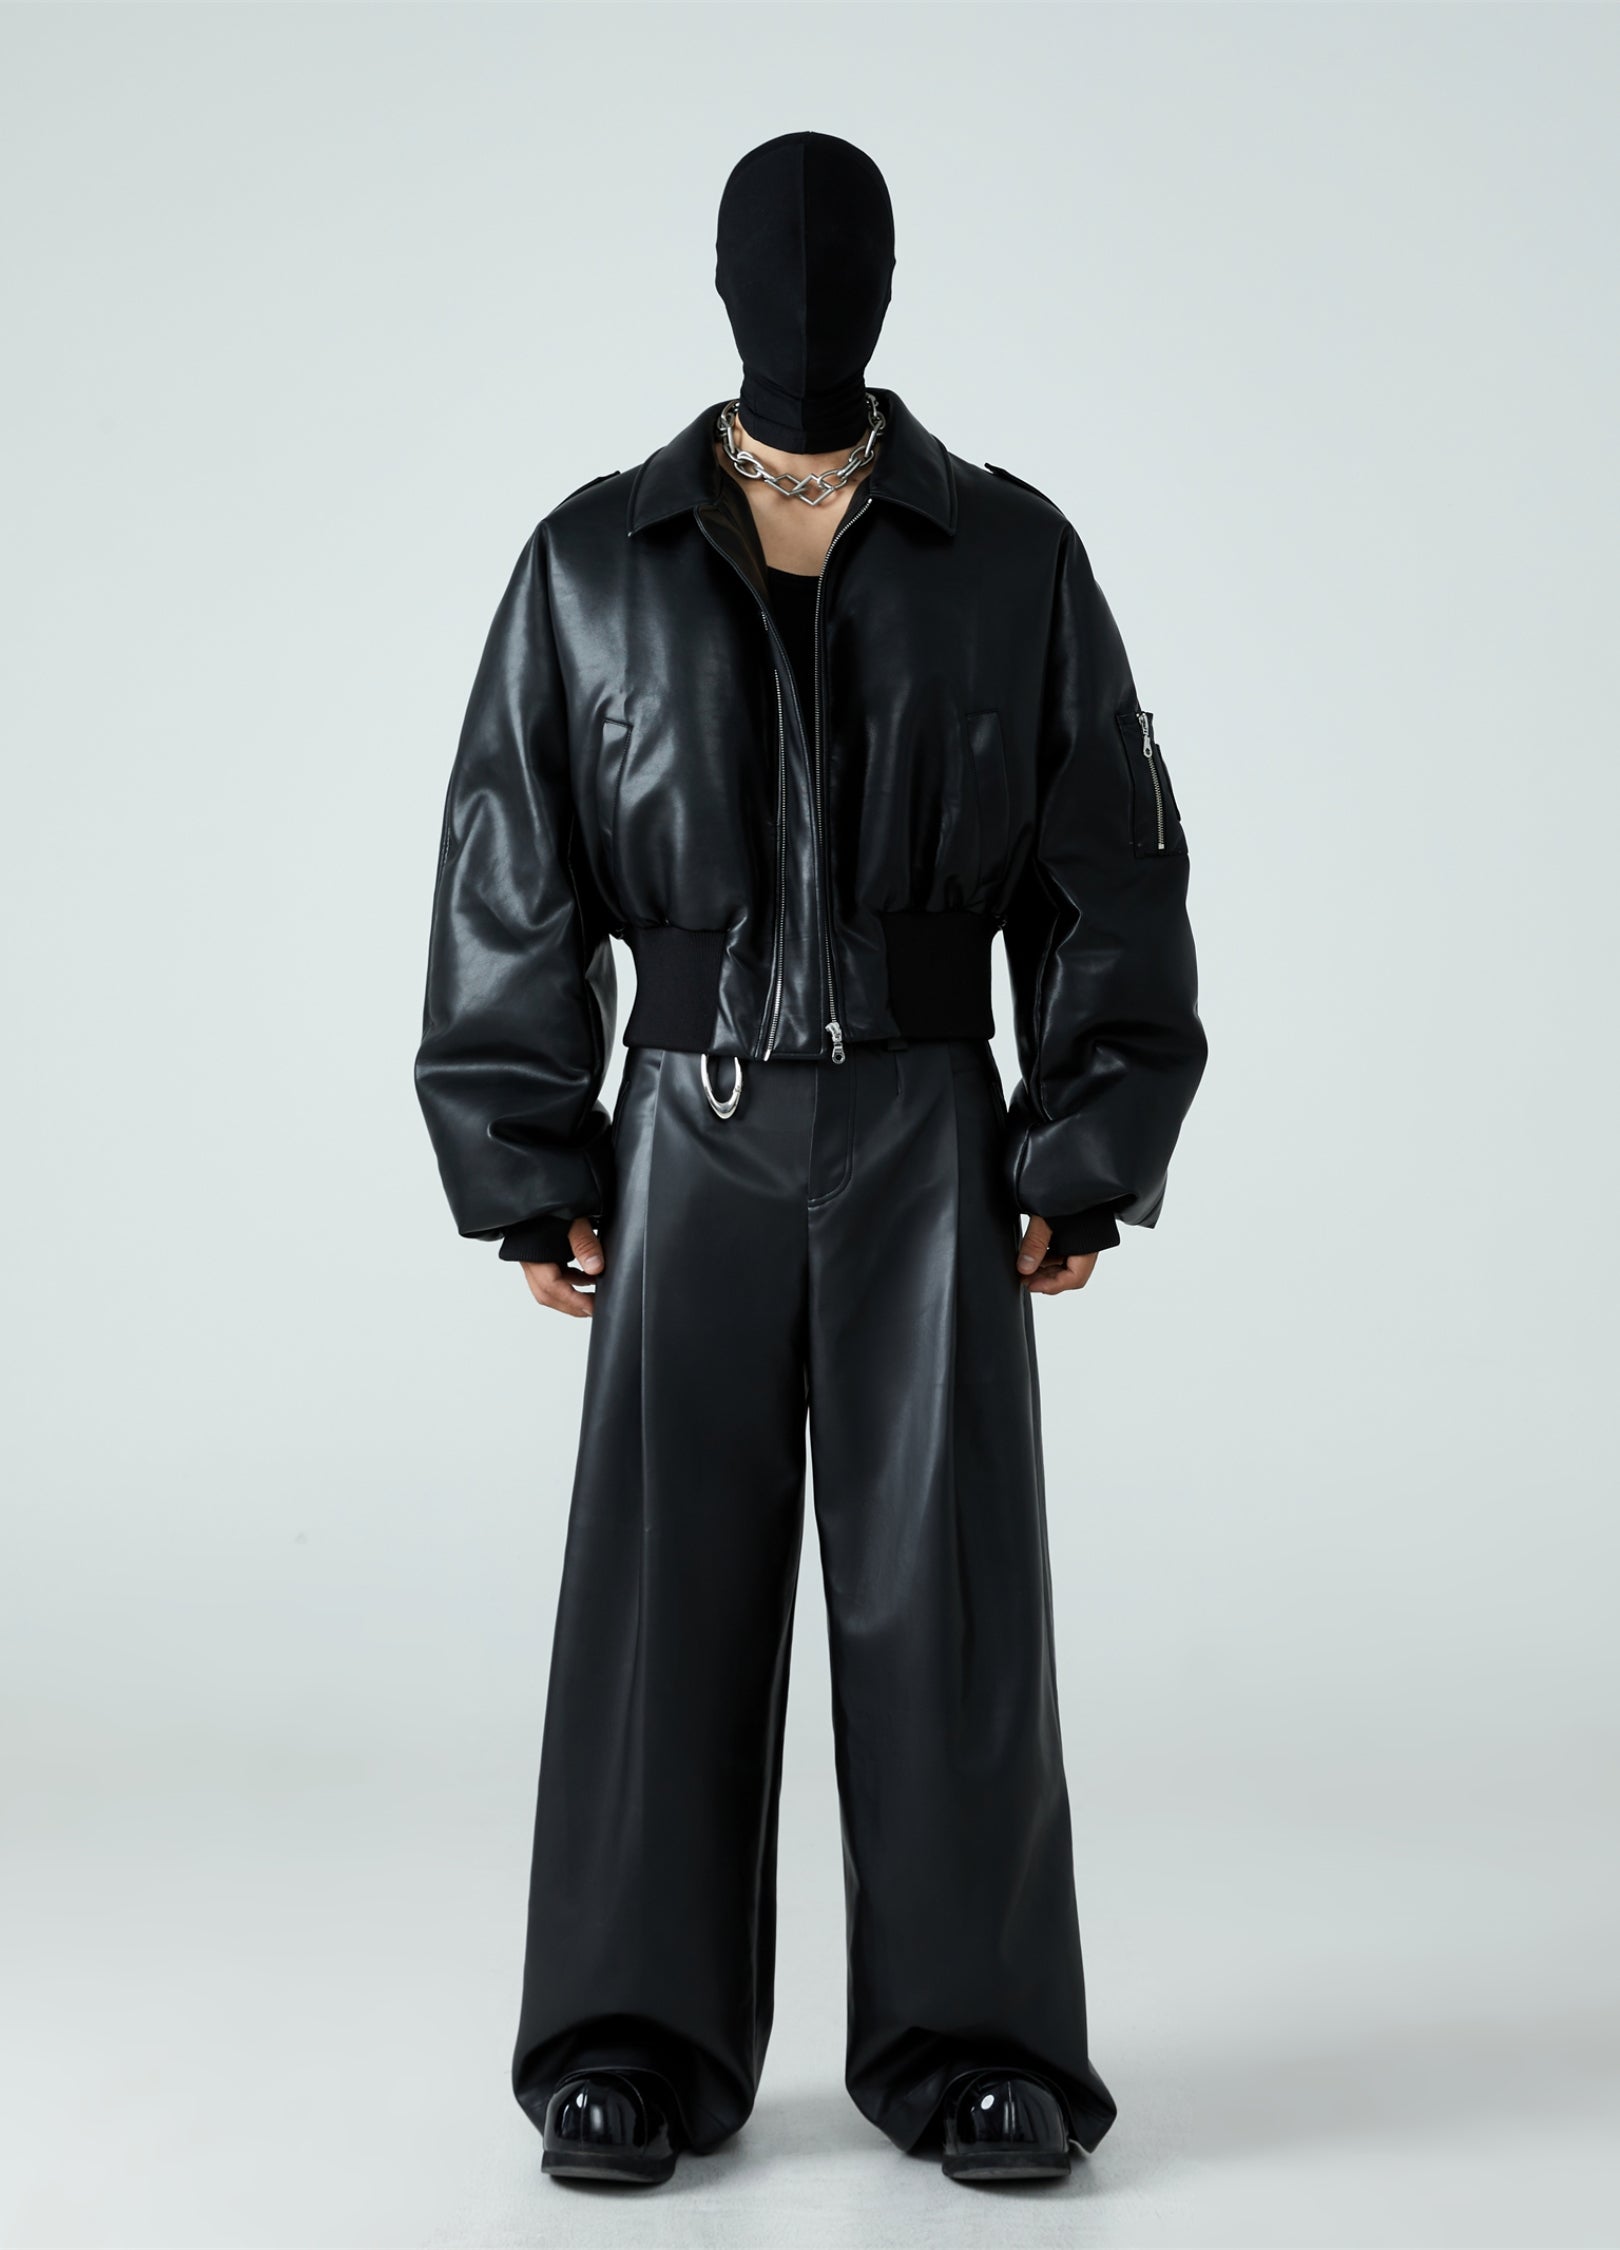 FRKM SCD - Shiny PU Leather Jacketカラーブラック - ジャケット ...